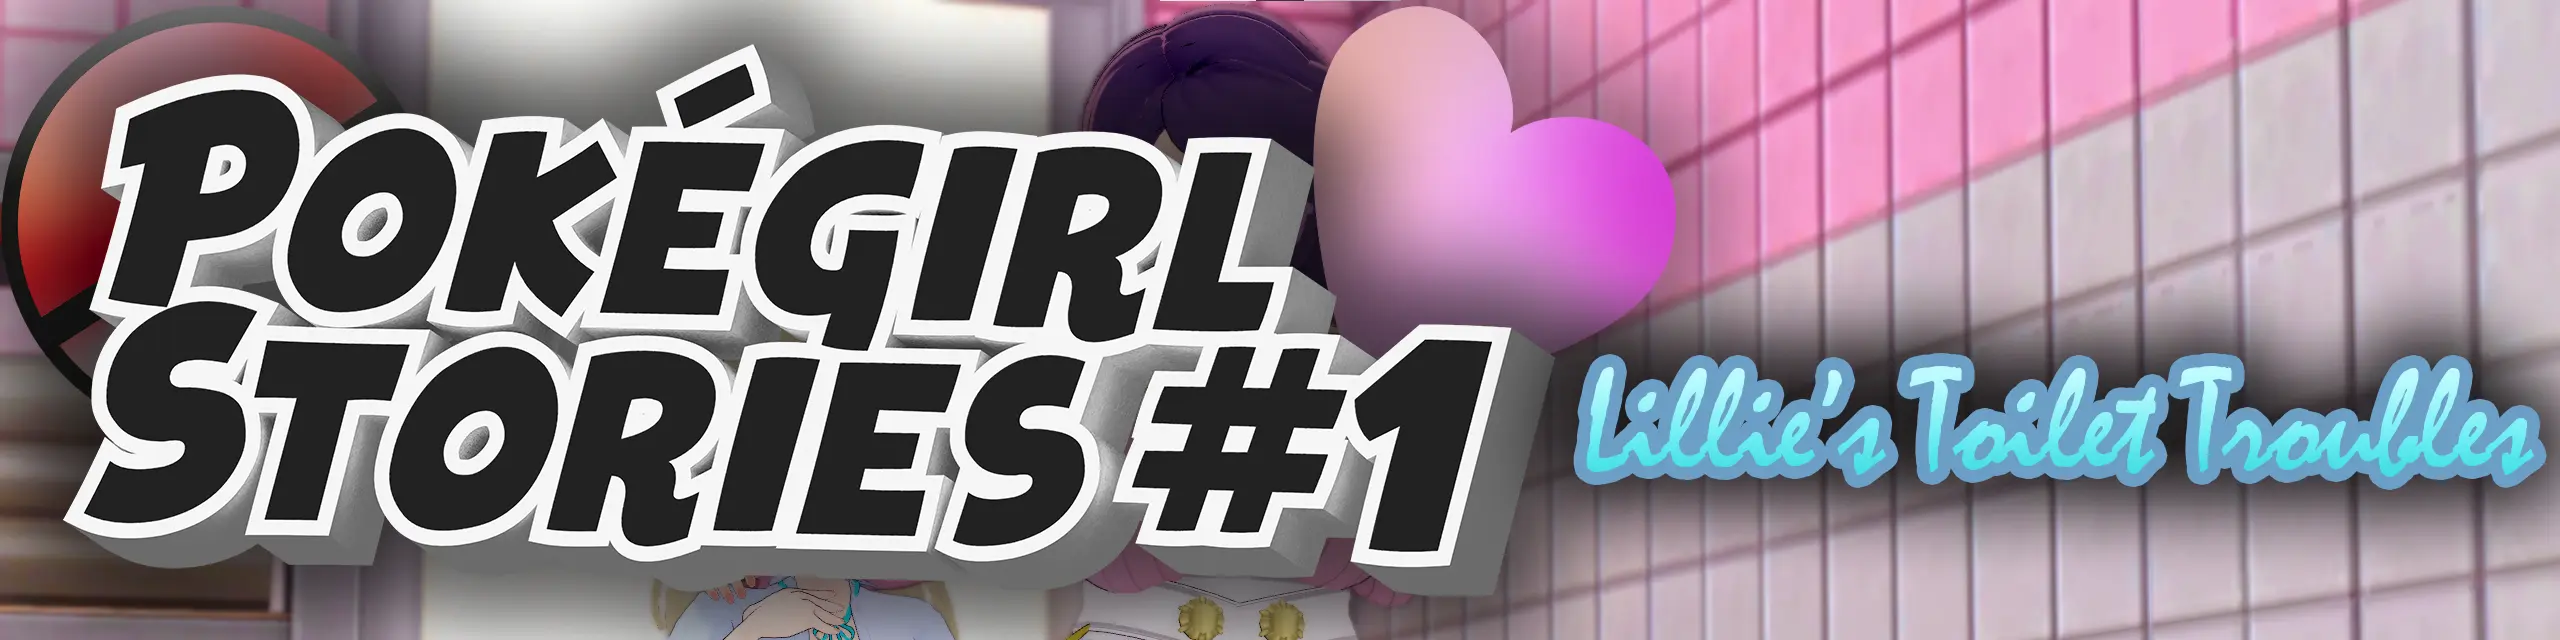 Pokégirl Stories #1: Lillie's Toilet troubles [v0.1] main image